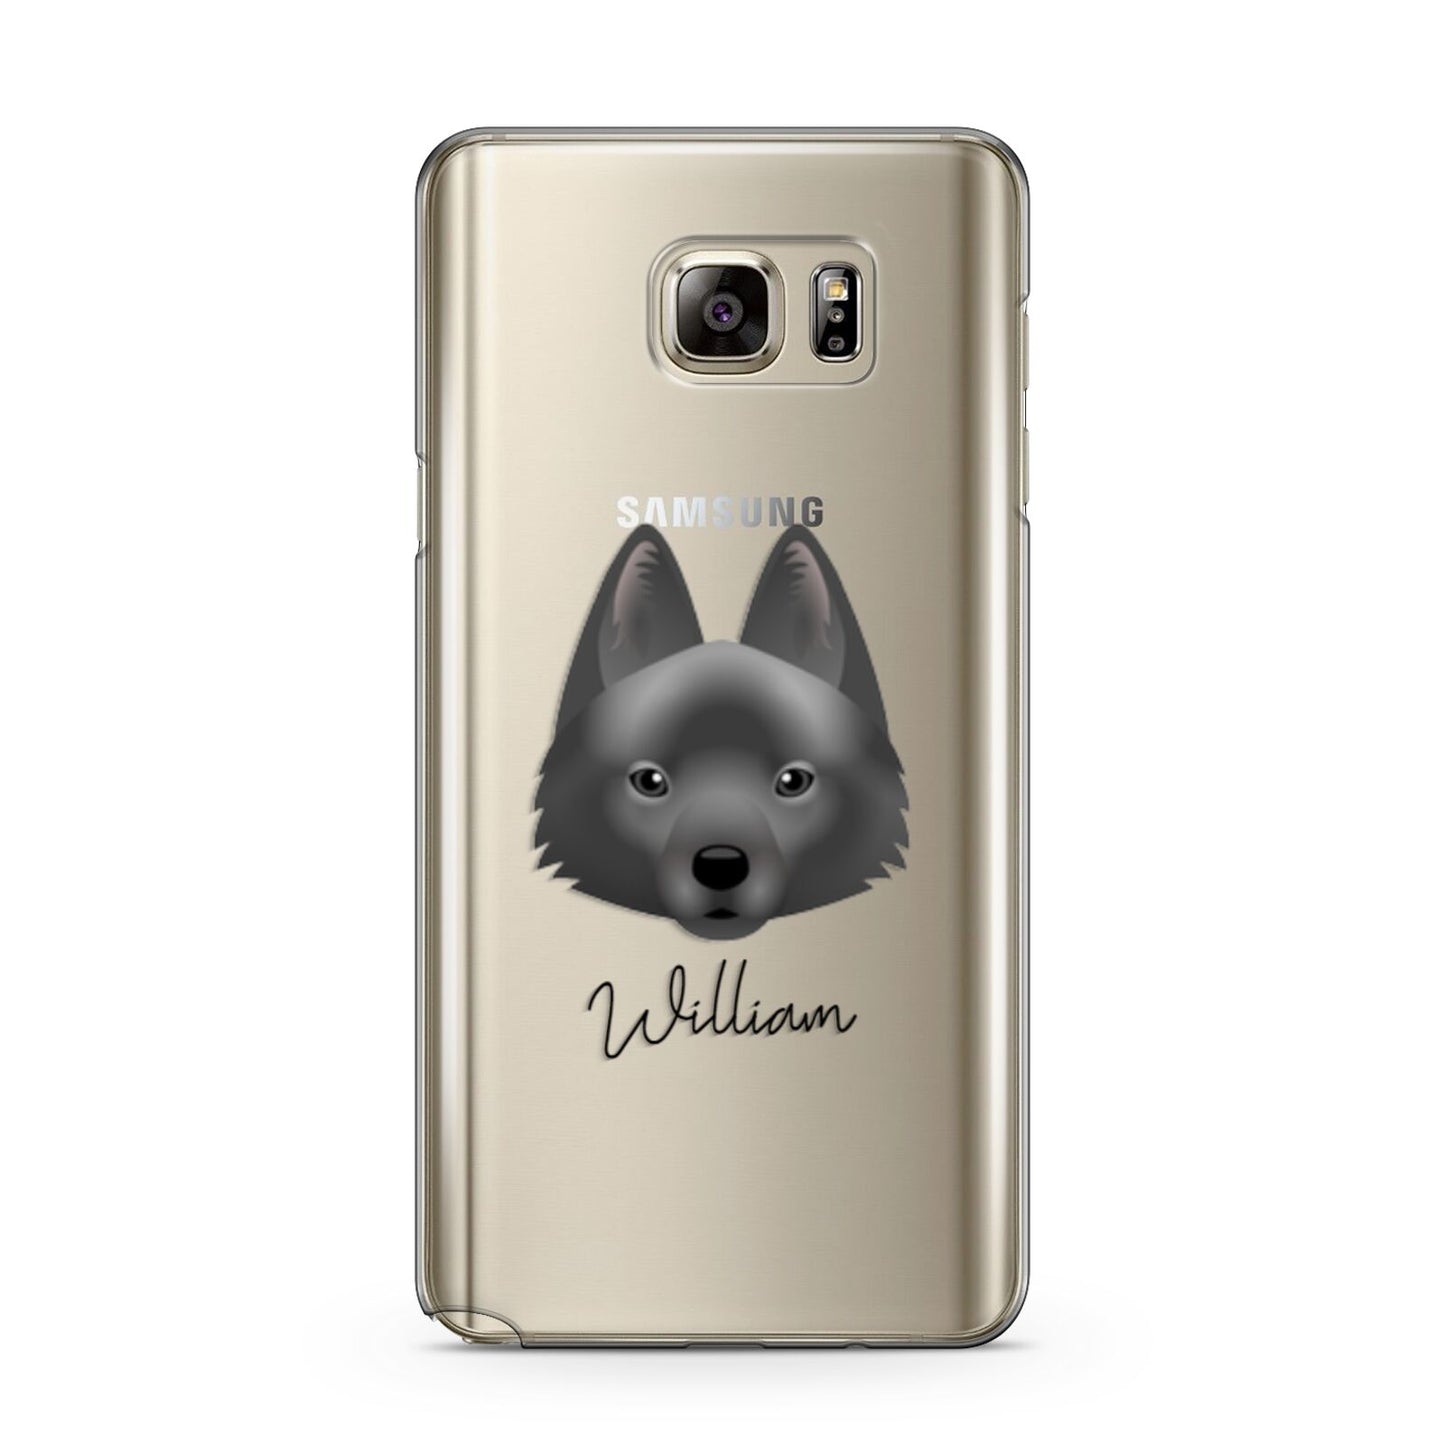 Schipperke Personalised Samsung Galaxy Note 5 Case